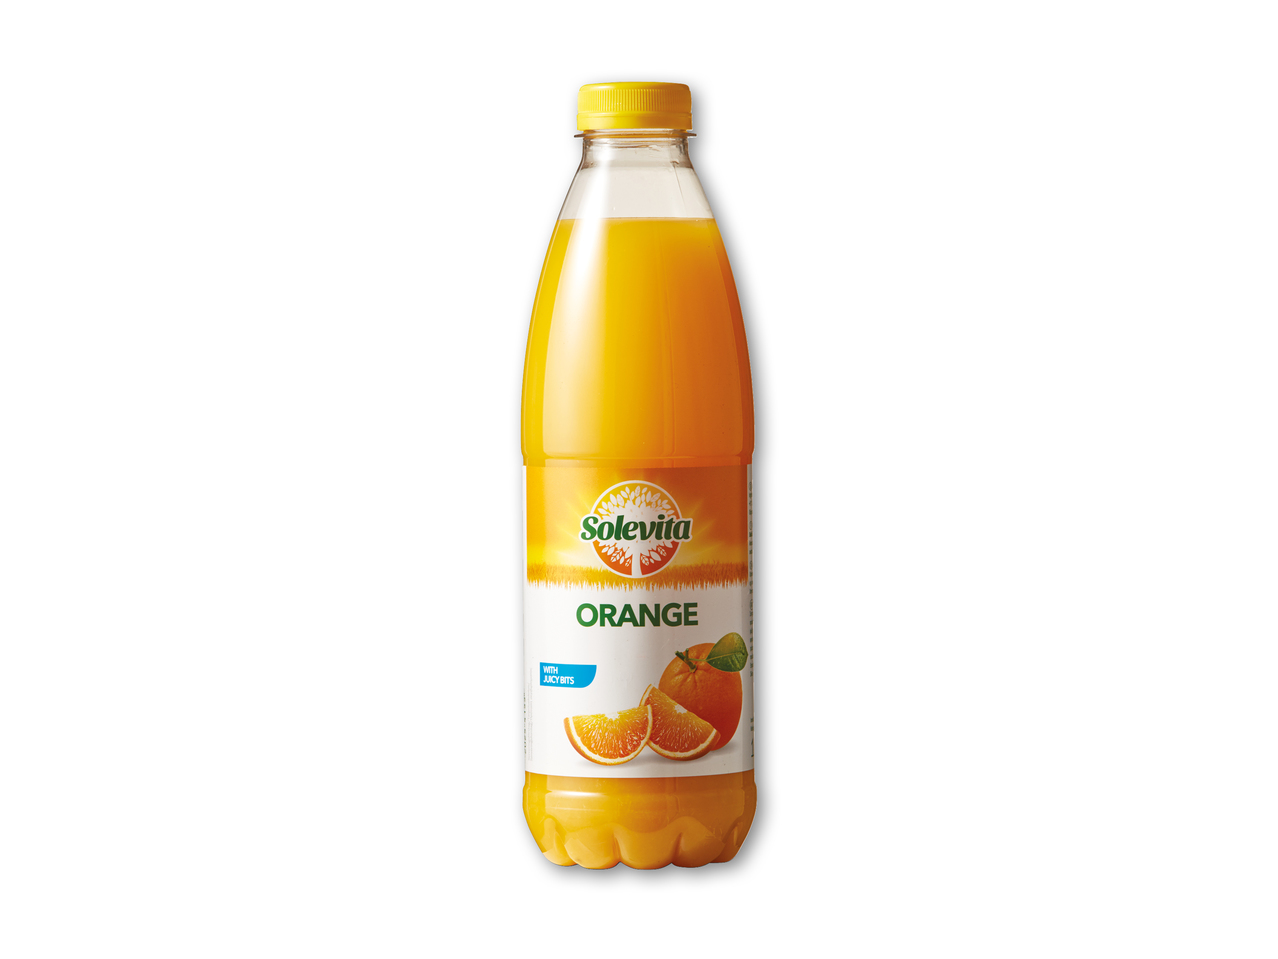 SOLEVITA Appelsinjuice